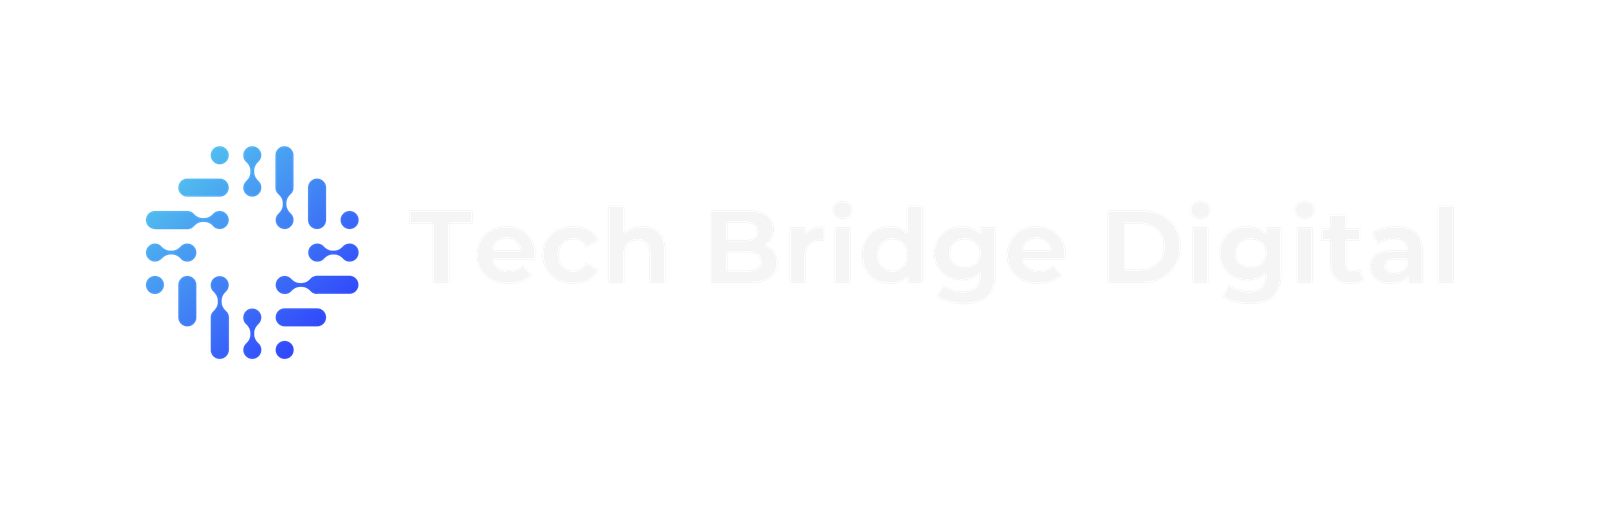 Tech Bridge Digital